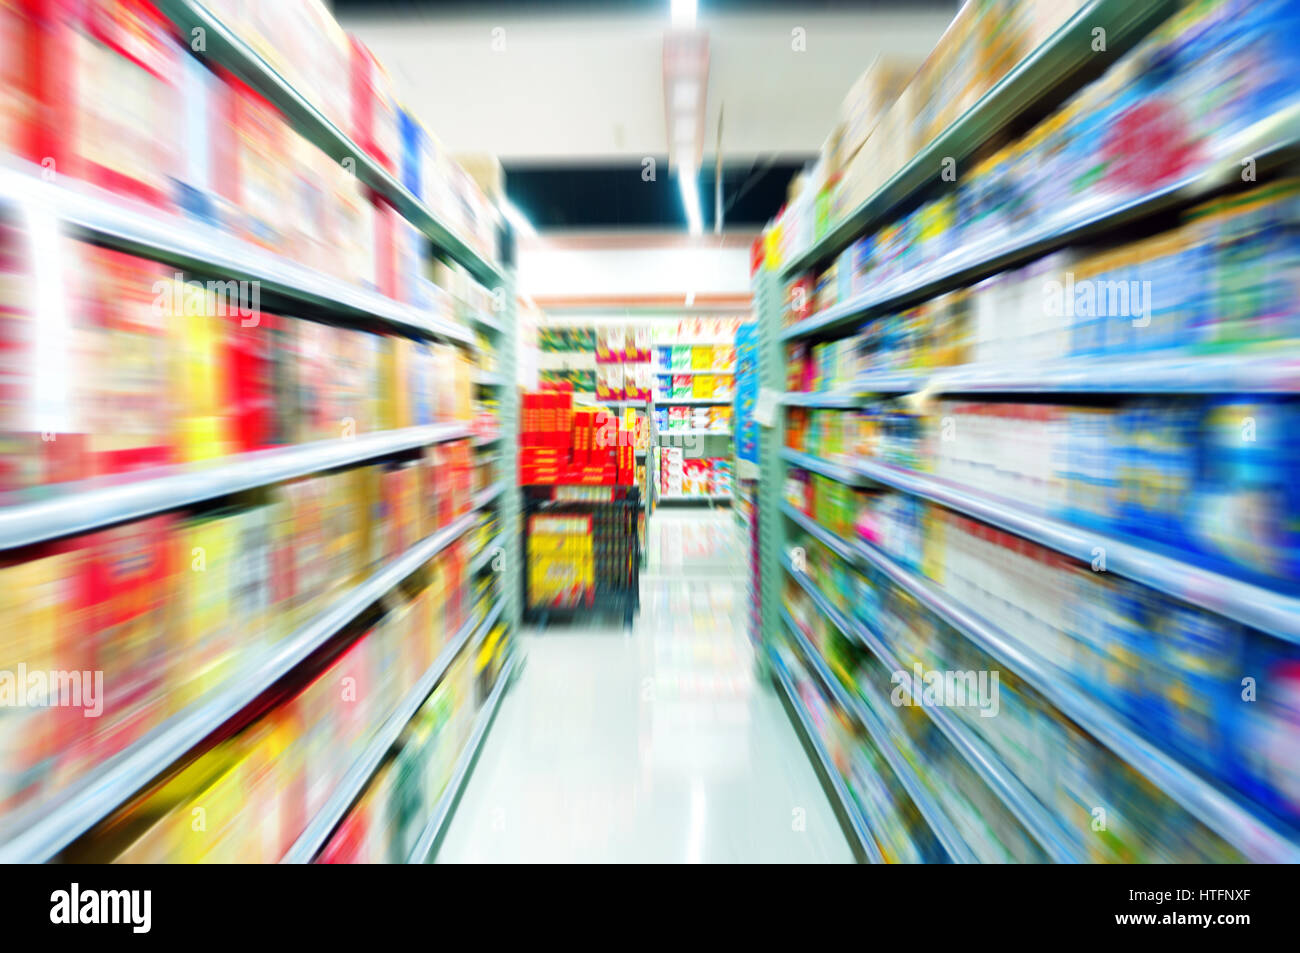 Supermarkets, lens blur effect. Stock Photo